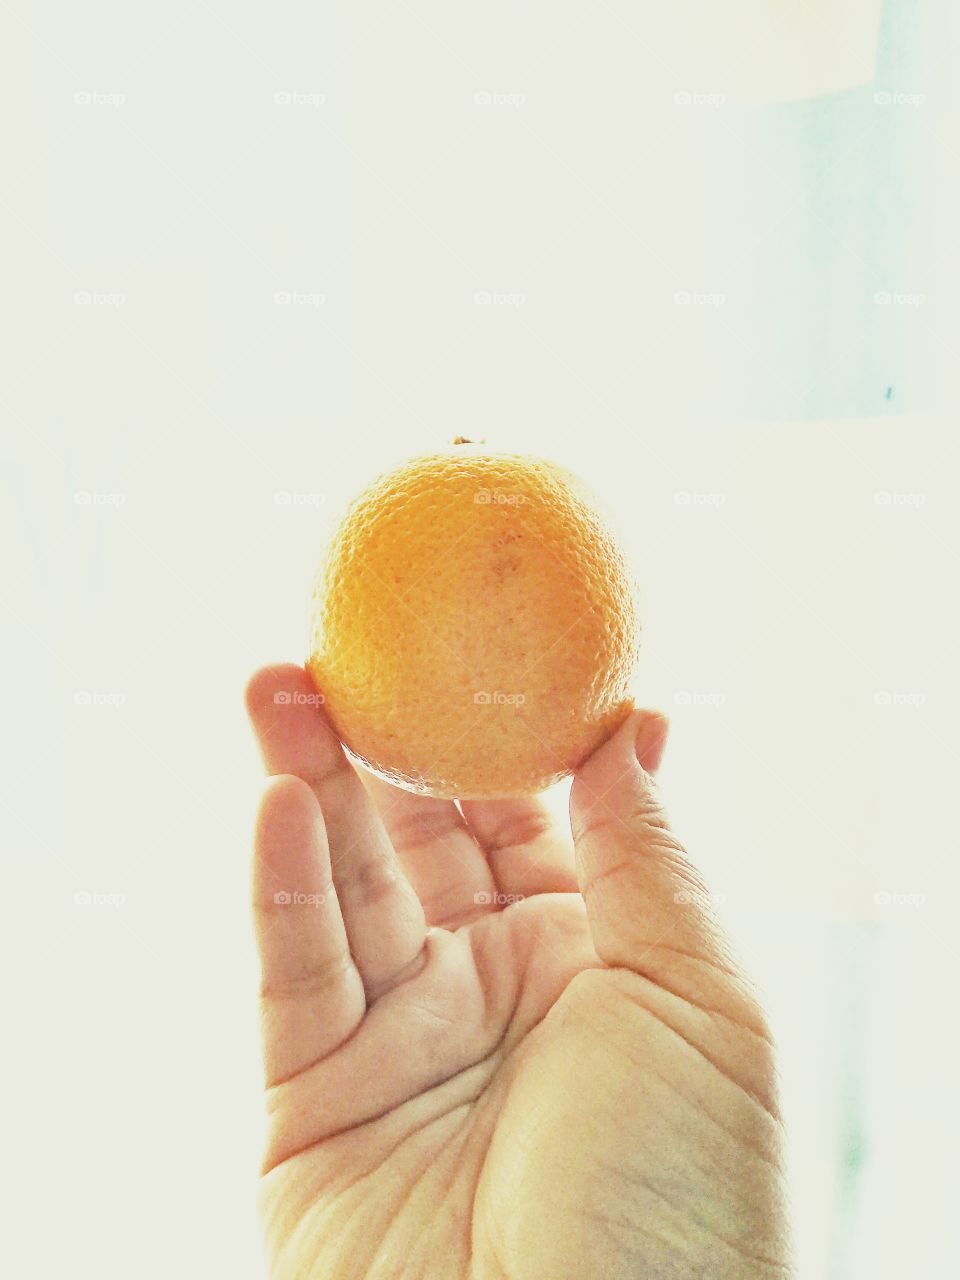 Feel good with orange fruits